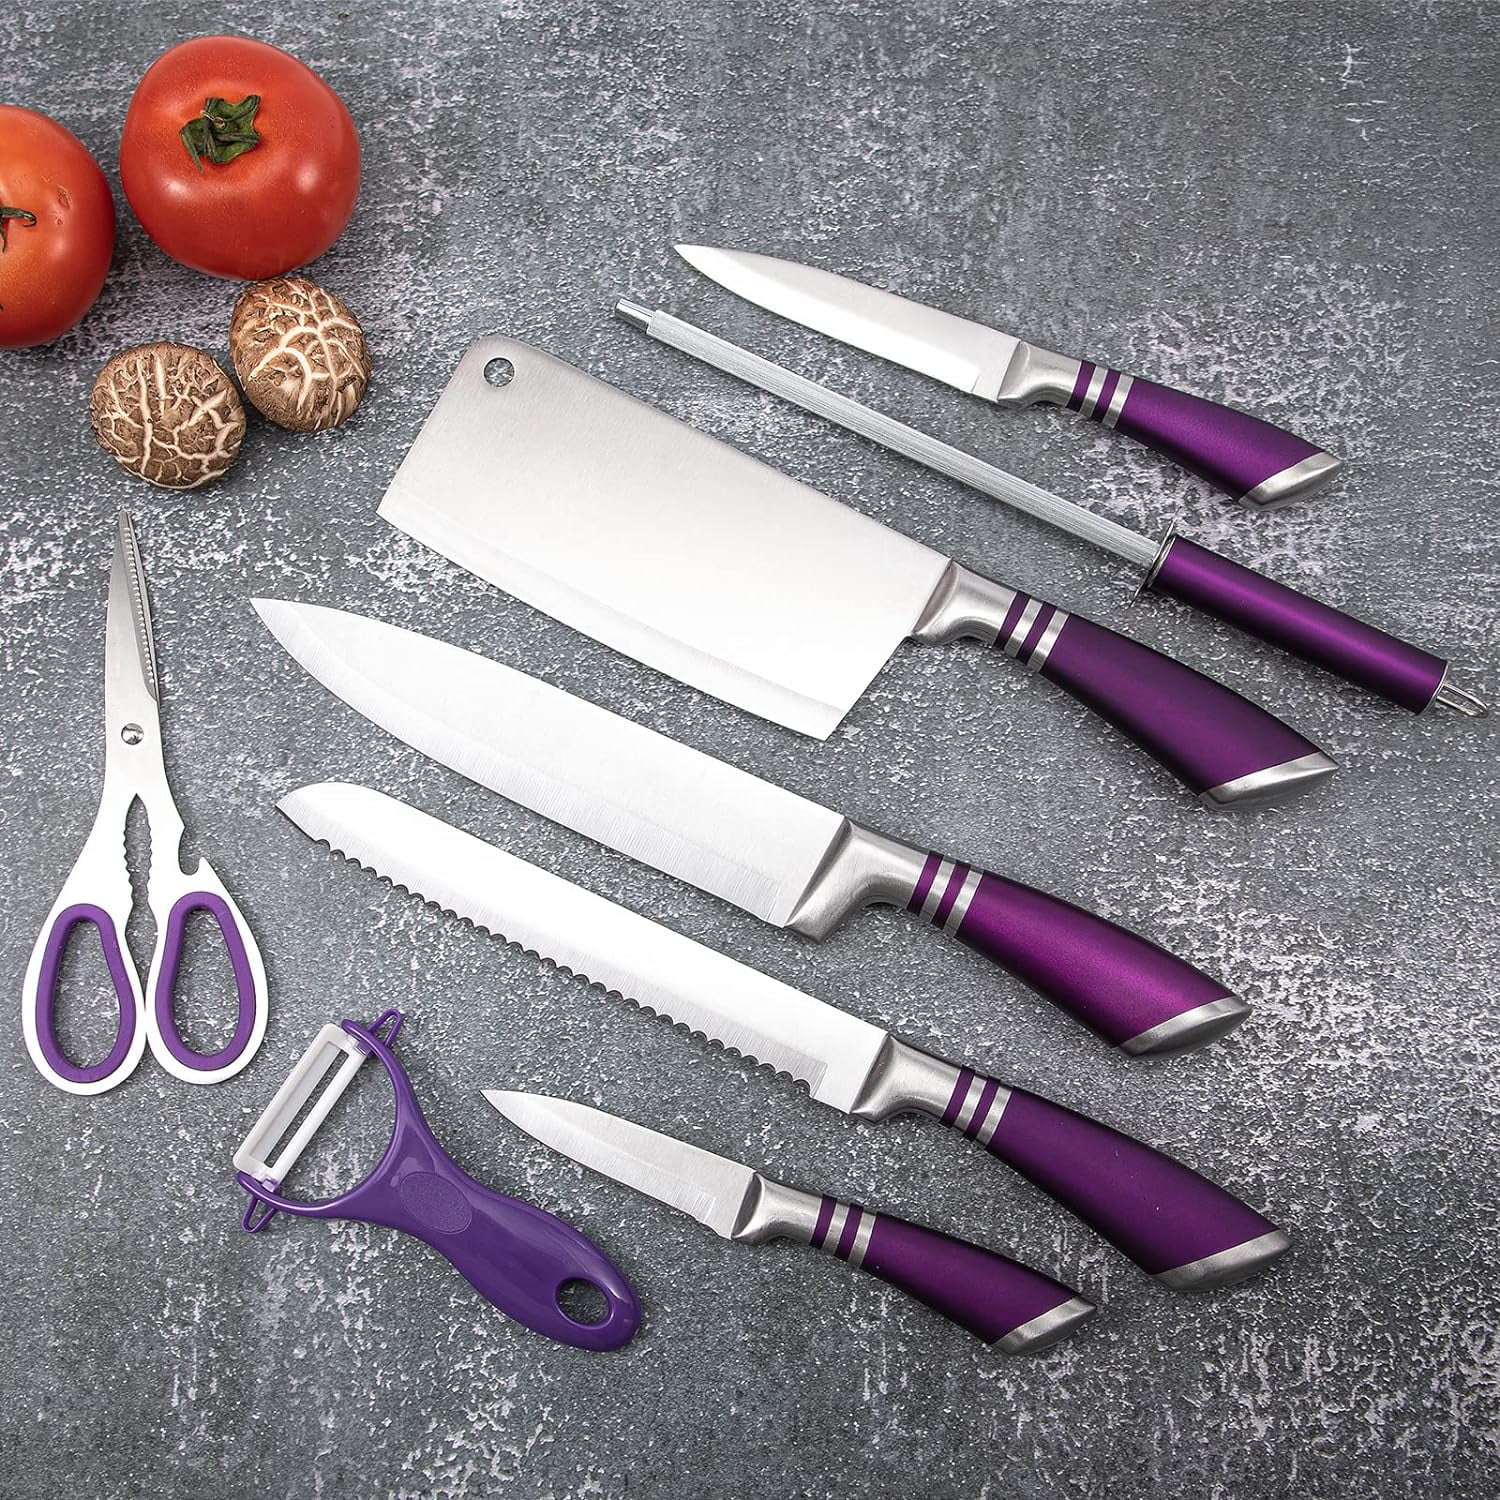 PurpleChef 10 Piece Stainless Steel Assorted Knife Set & Reviews